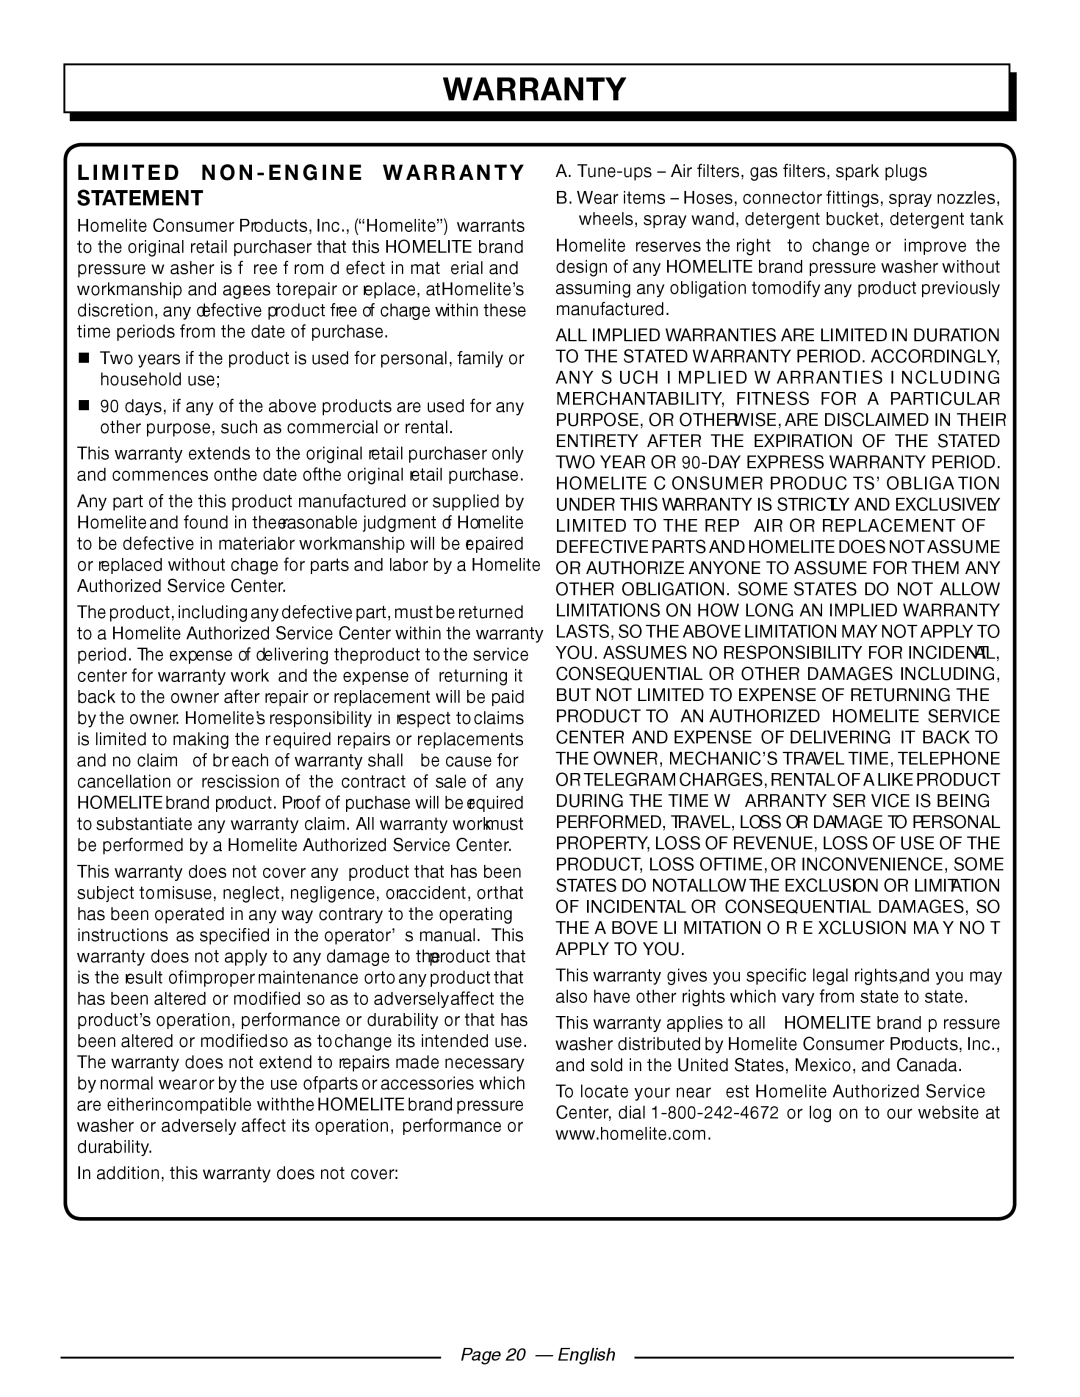 Homelite UT80911, UT80709 manuel dutilisation Limited Non - Engine Warranty Statement, Page 20 - English 